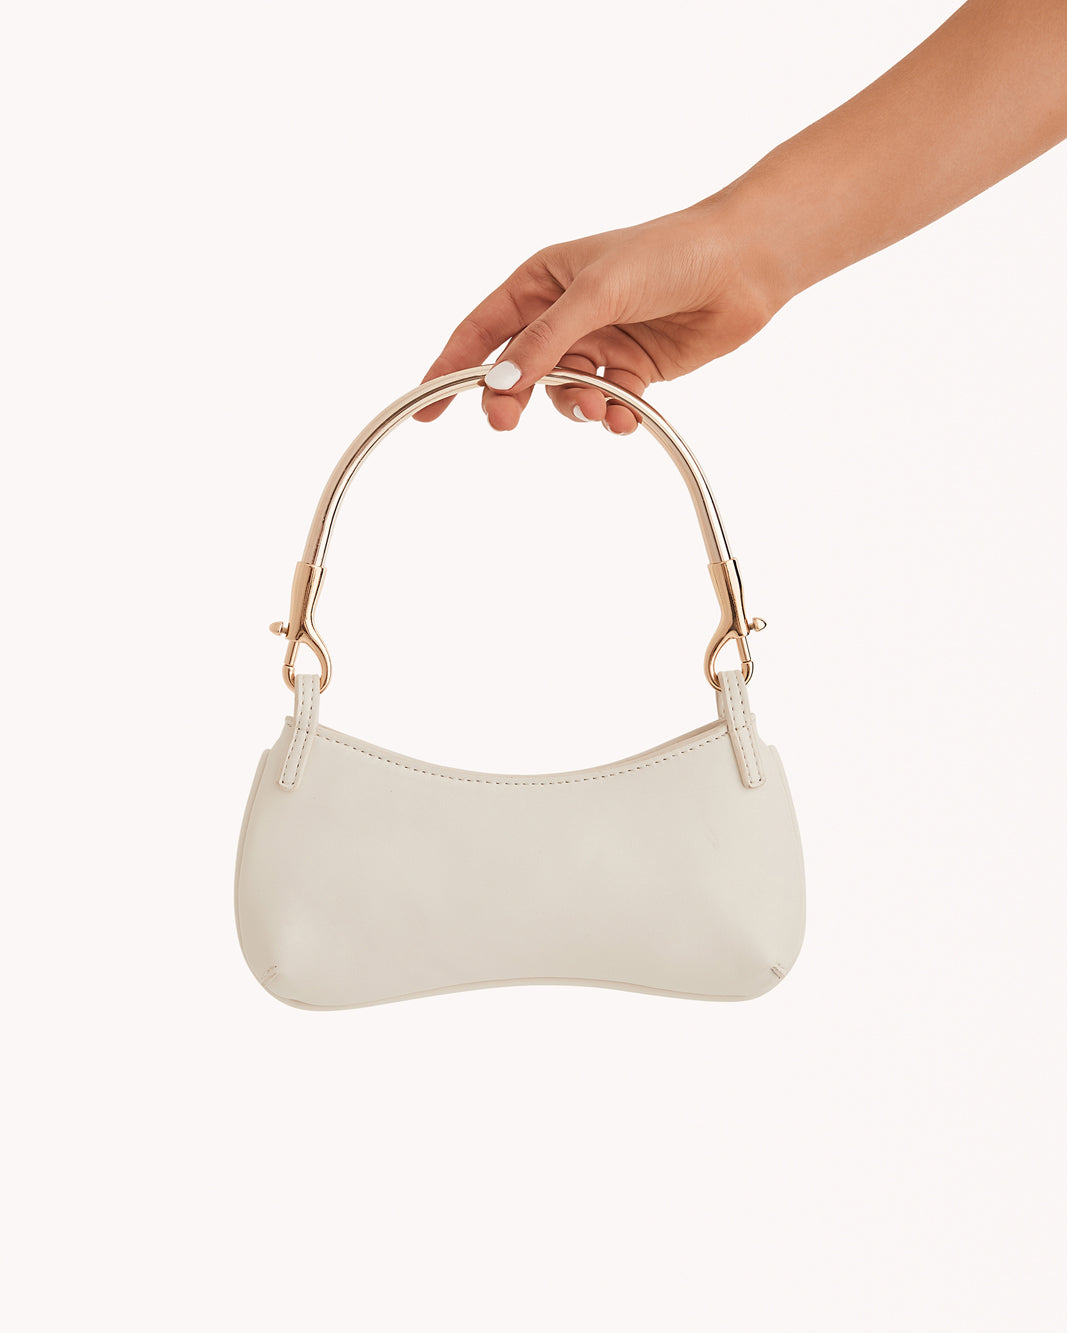 BECCA HANDLE BAG - BONE-Handbags-Billini-O/S-Billini